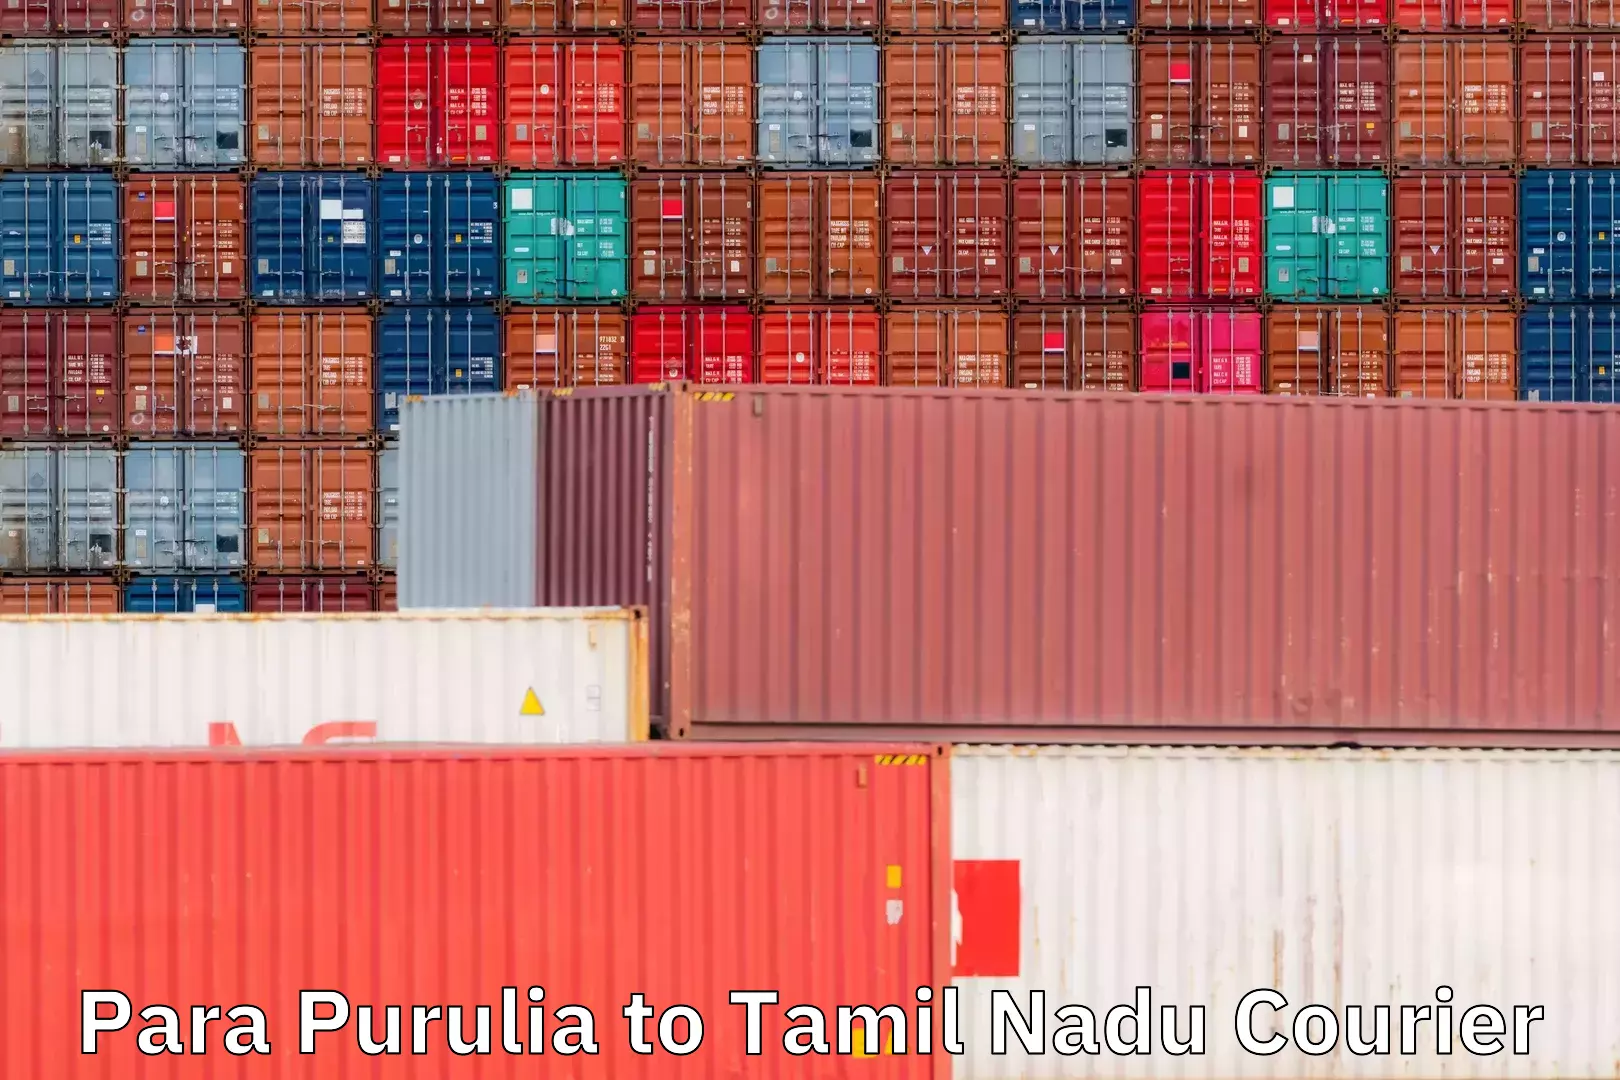 Professional courier handling Para Purulia to Tamil Nadu